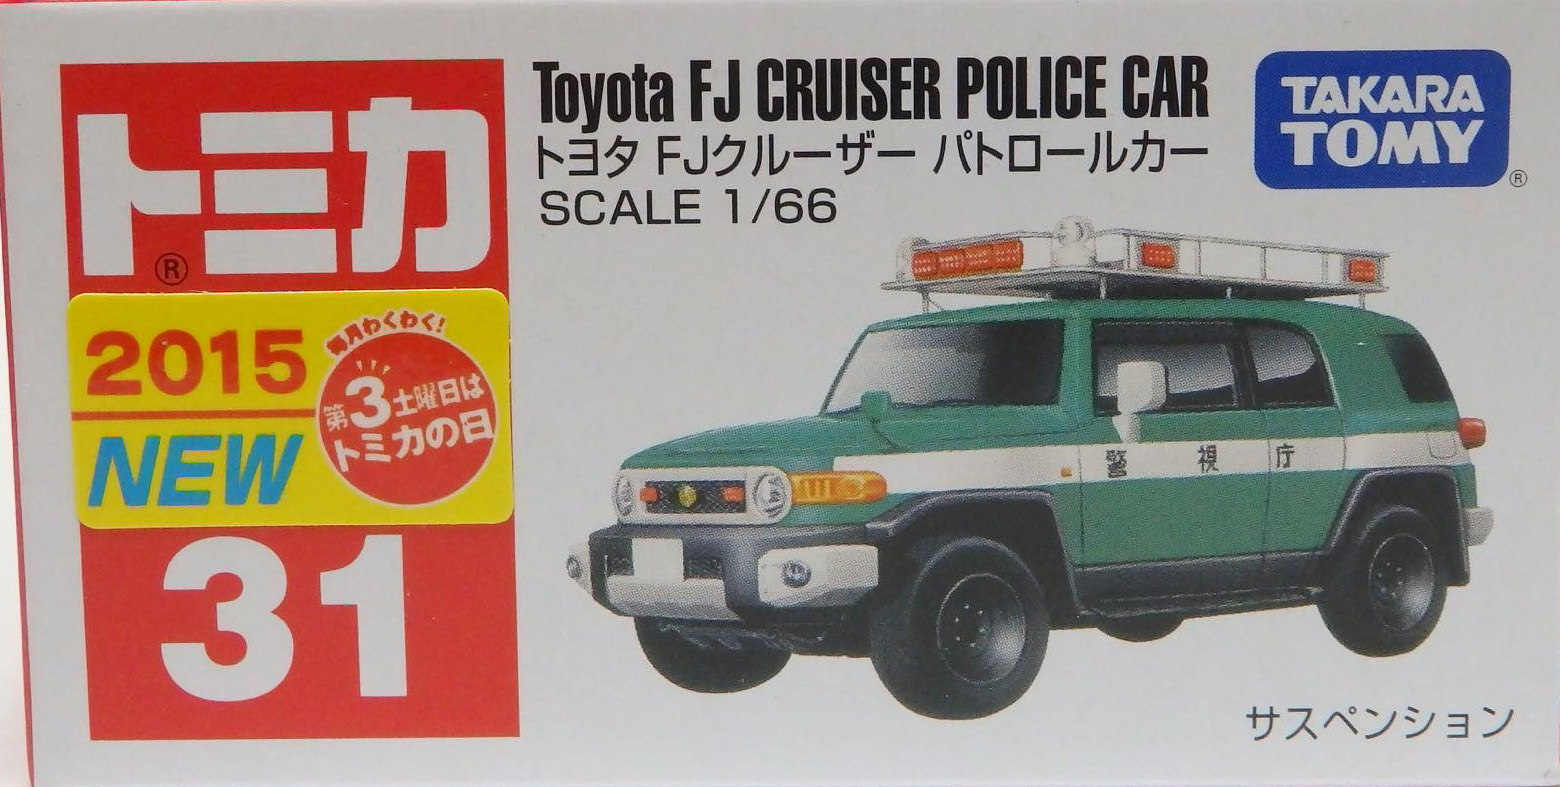 No. 31 Toyota FJ Cruiser Police Car | Tomica Wiki | Fandom